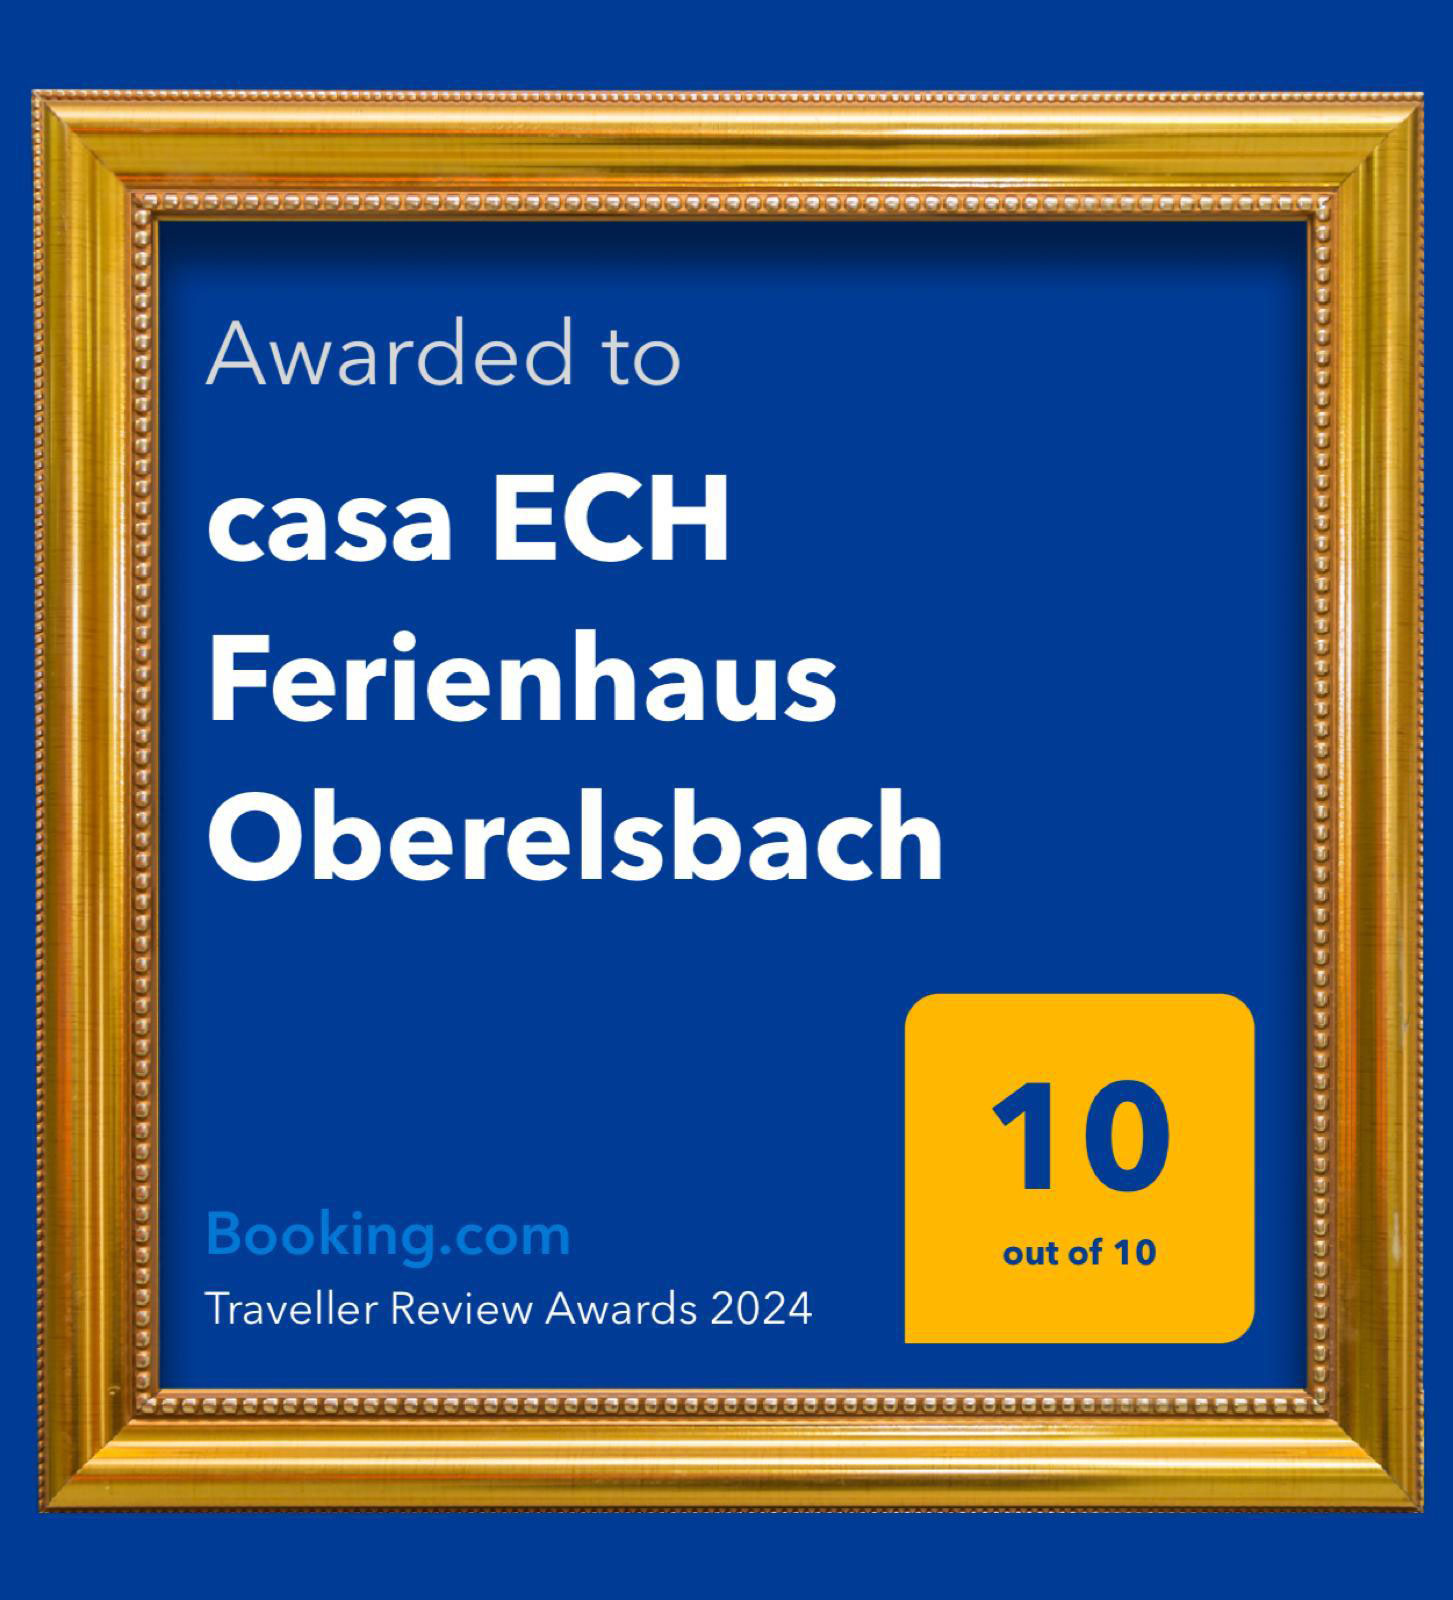 Casa ECH Booking Award